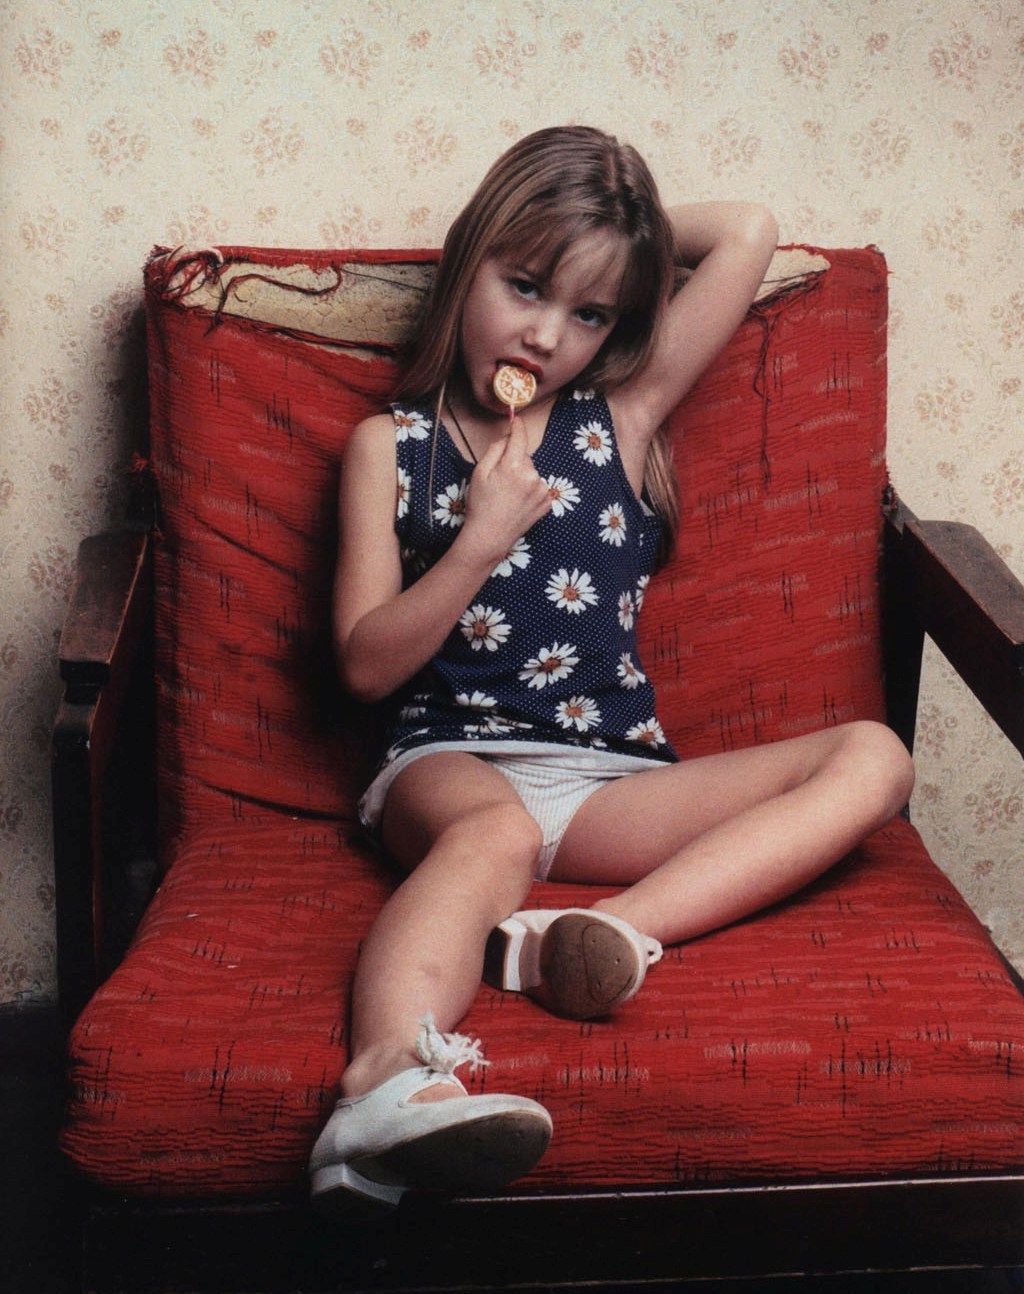 Young little girl smoking